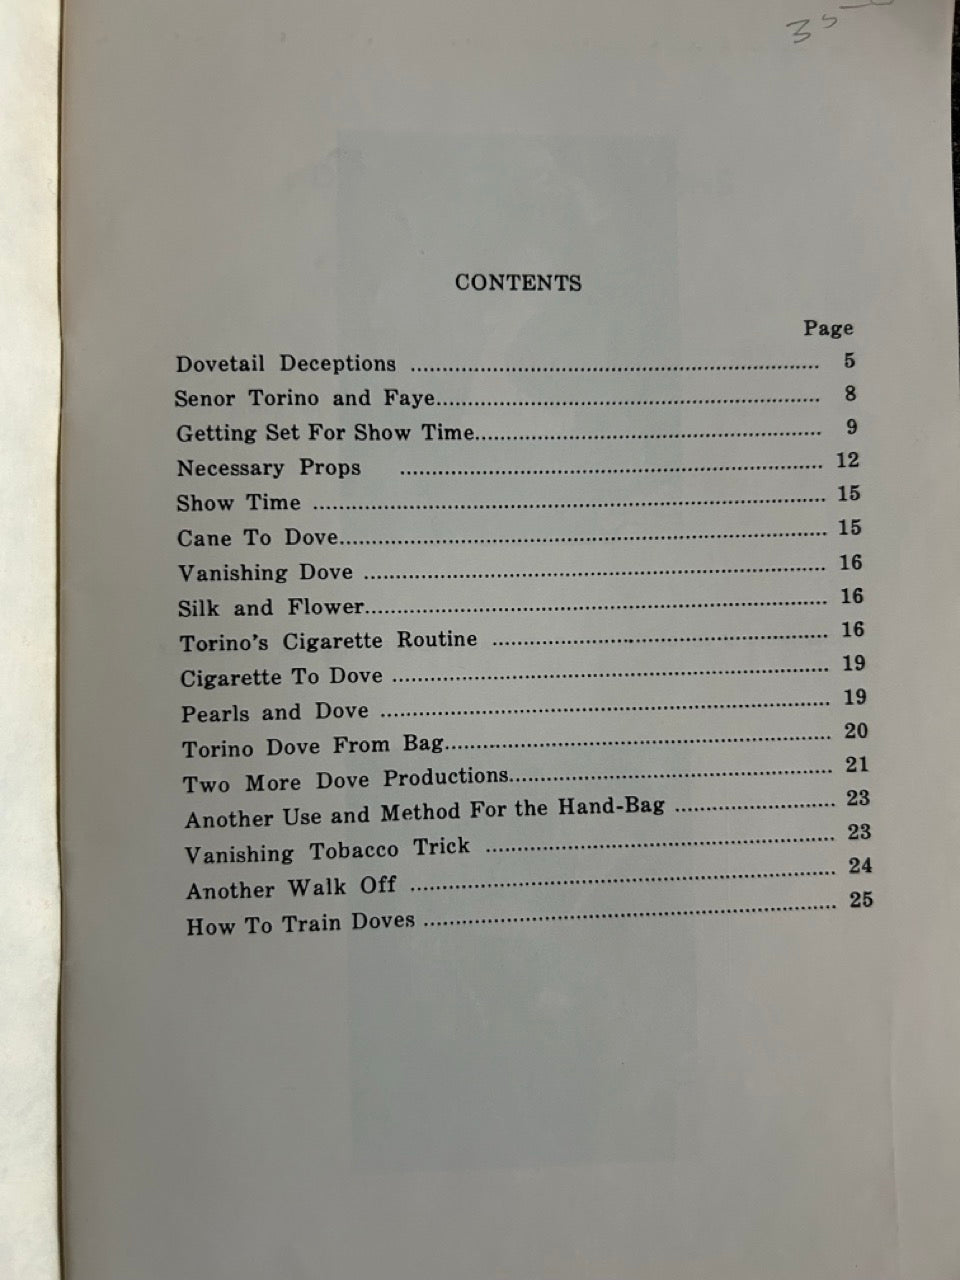 The Complete Works of Derek Dingle - Richard Kaufman - 1st edition (used)